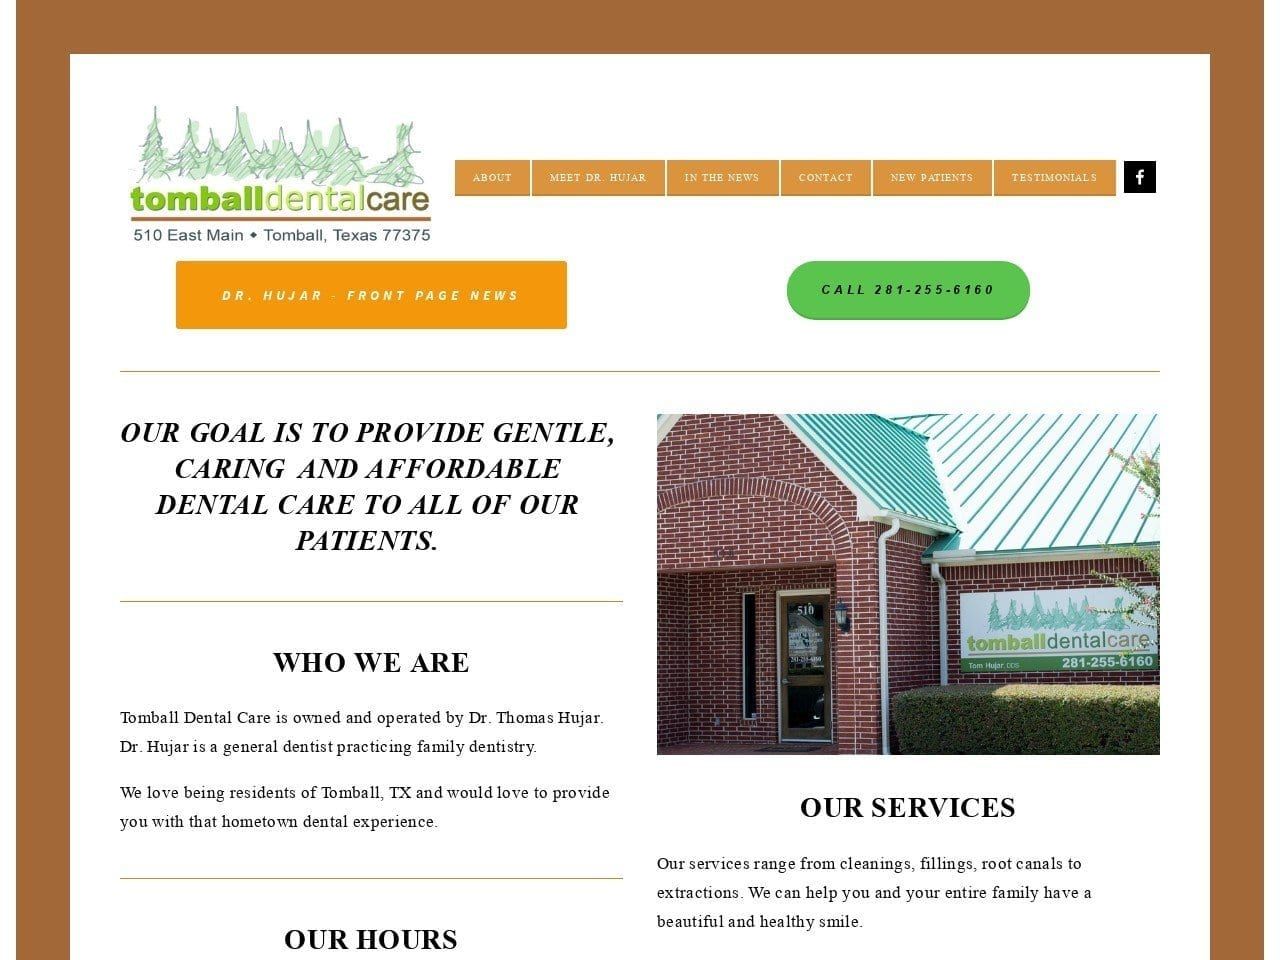 Tomball Dental Care Website Screenshot from tomballdentalcare.com